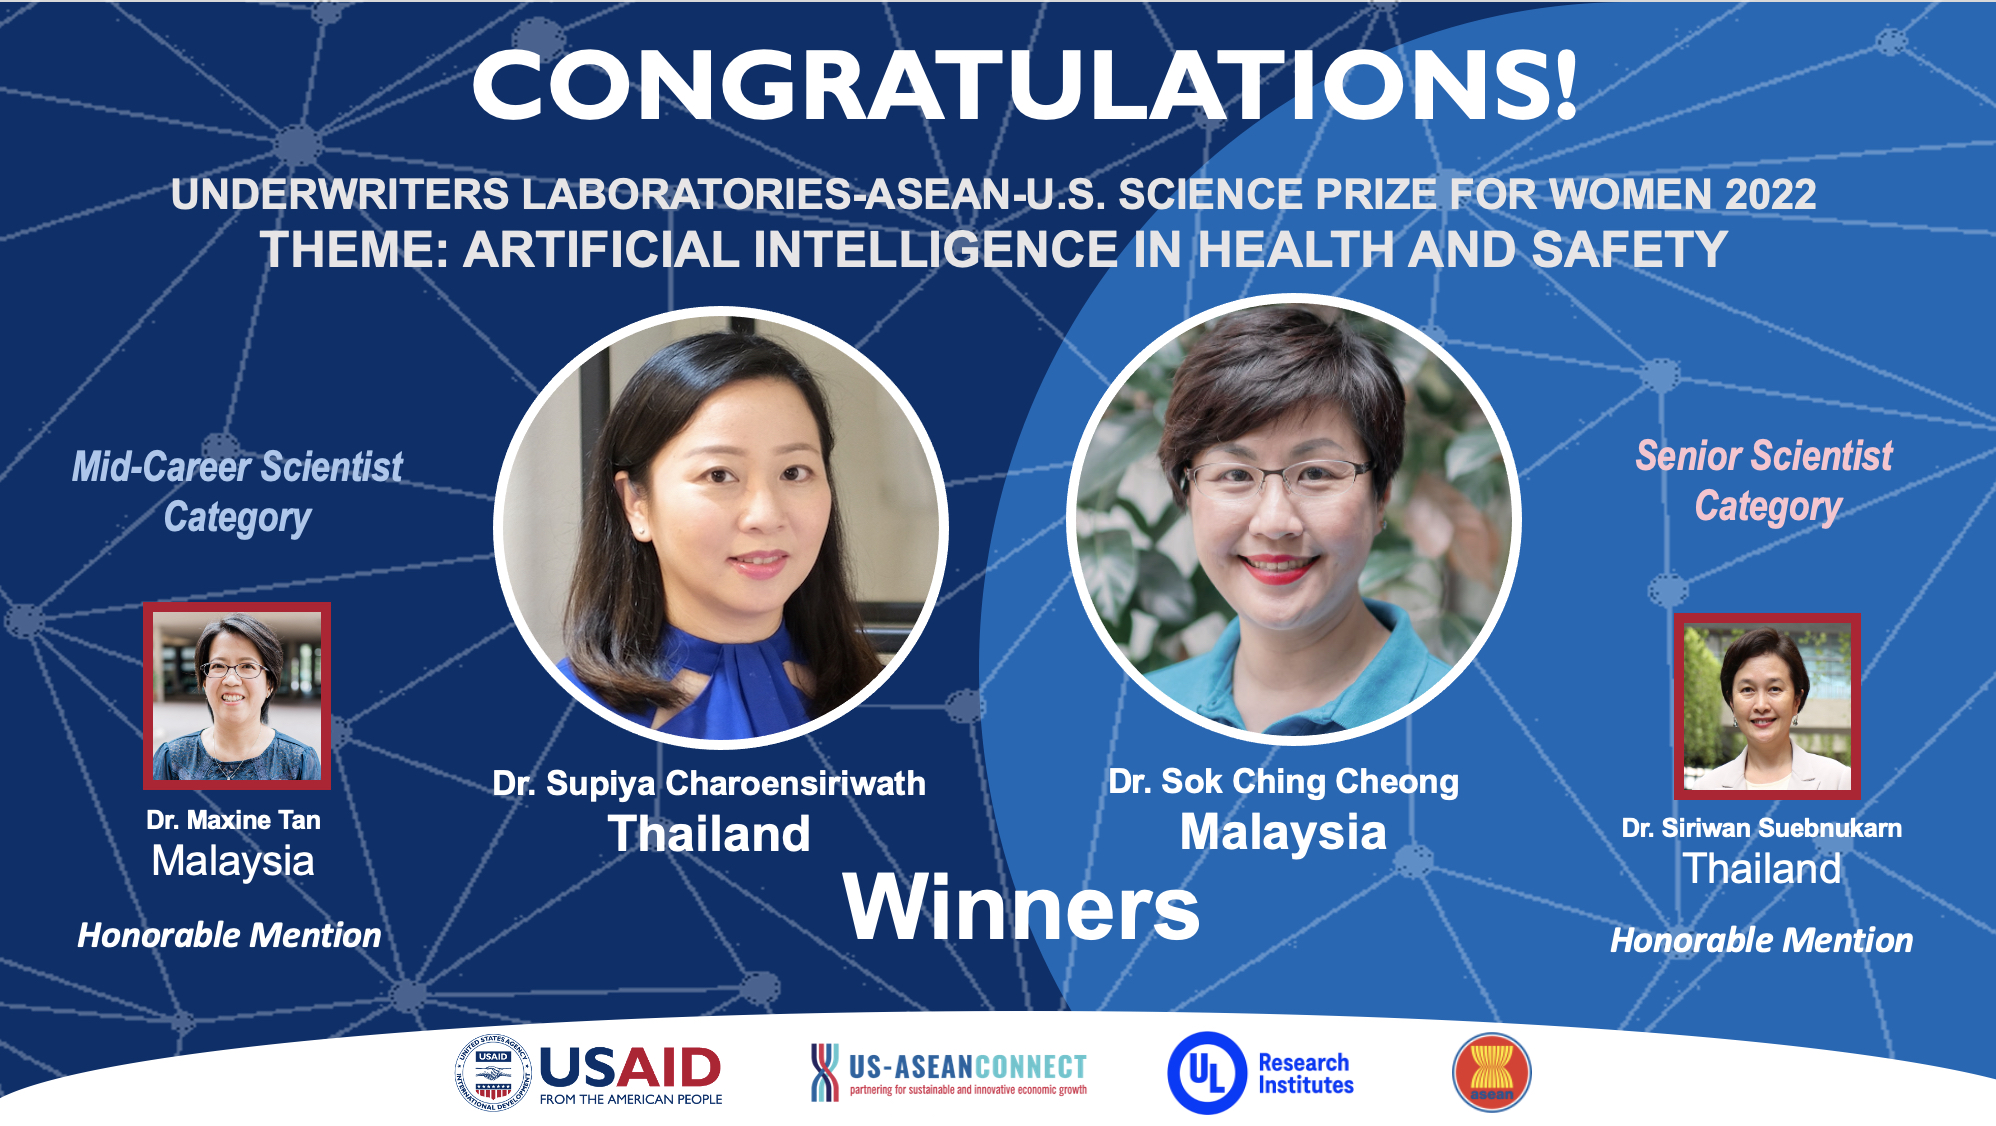 Underwriters Laboratories-ASEAN-U.S. Science Prize for Women 2022 Winners Announced